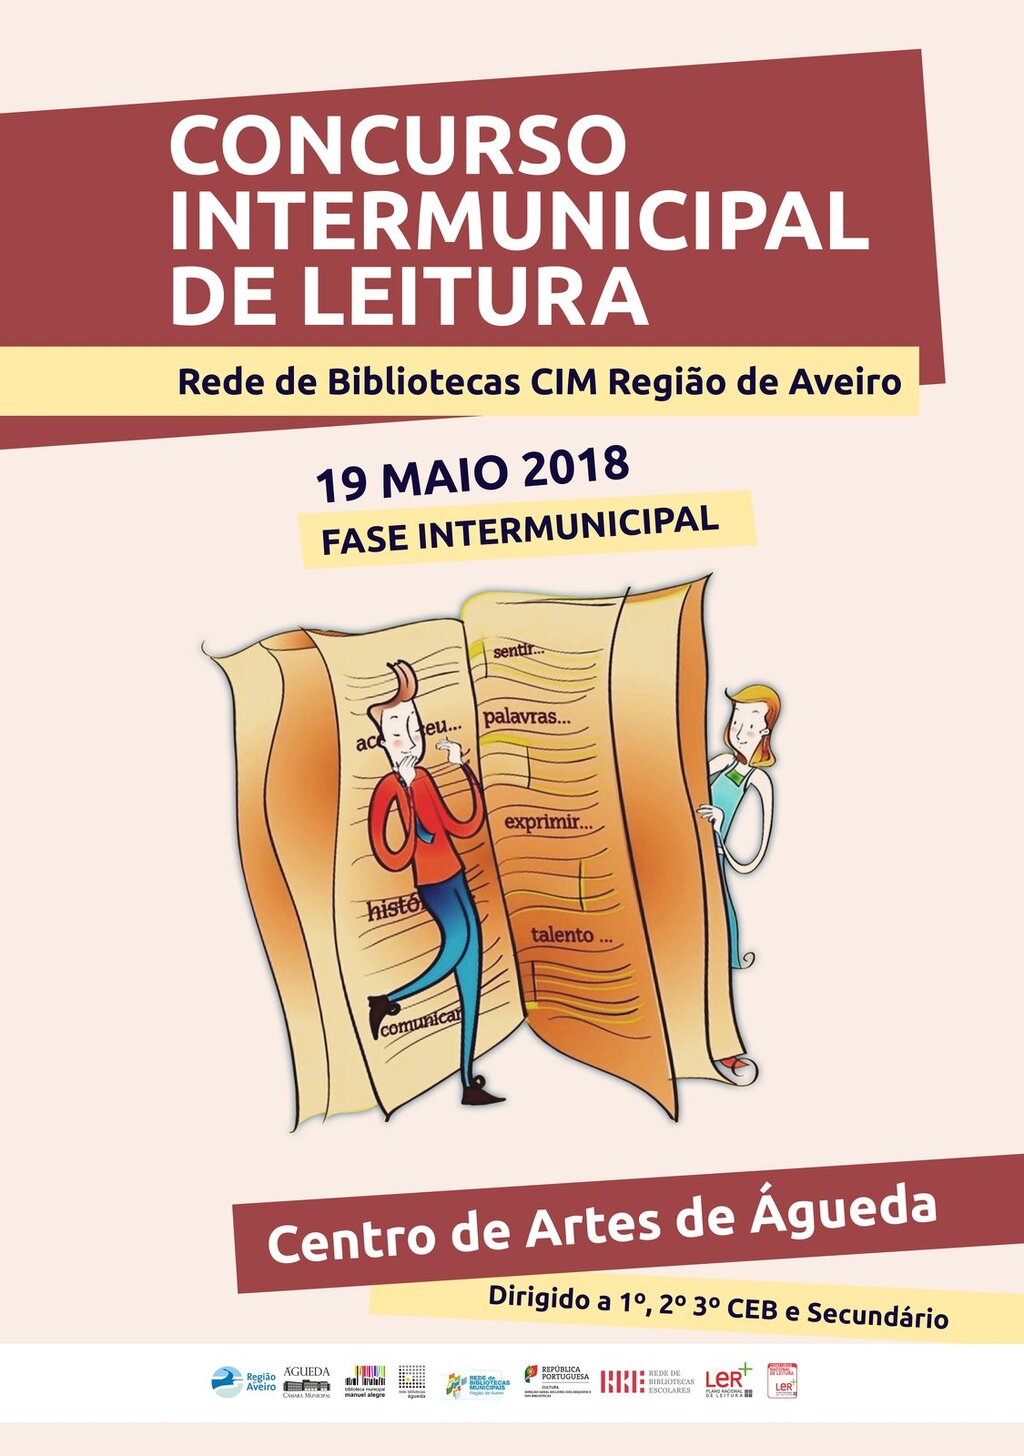 19 de maio: Final do Concurso Intermunicipal de Leitura no Centro de Artes de Águeda 